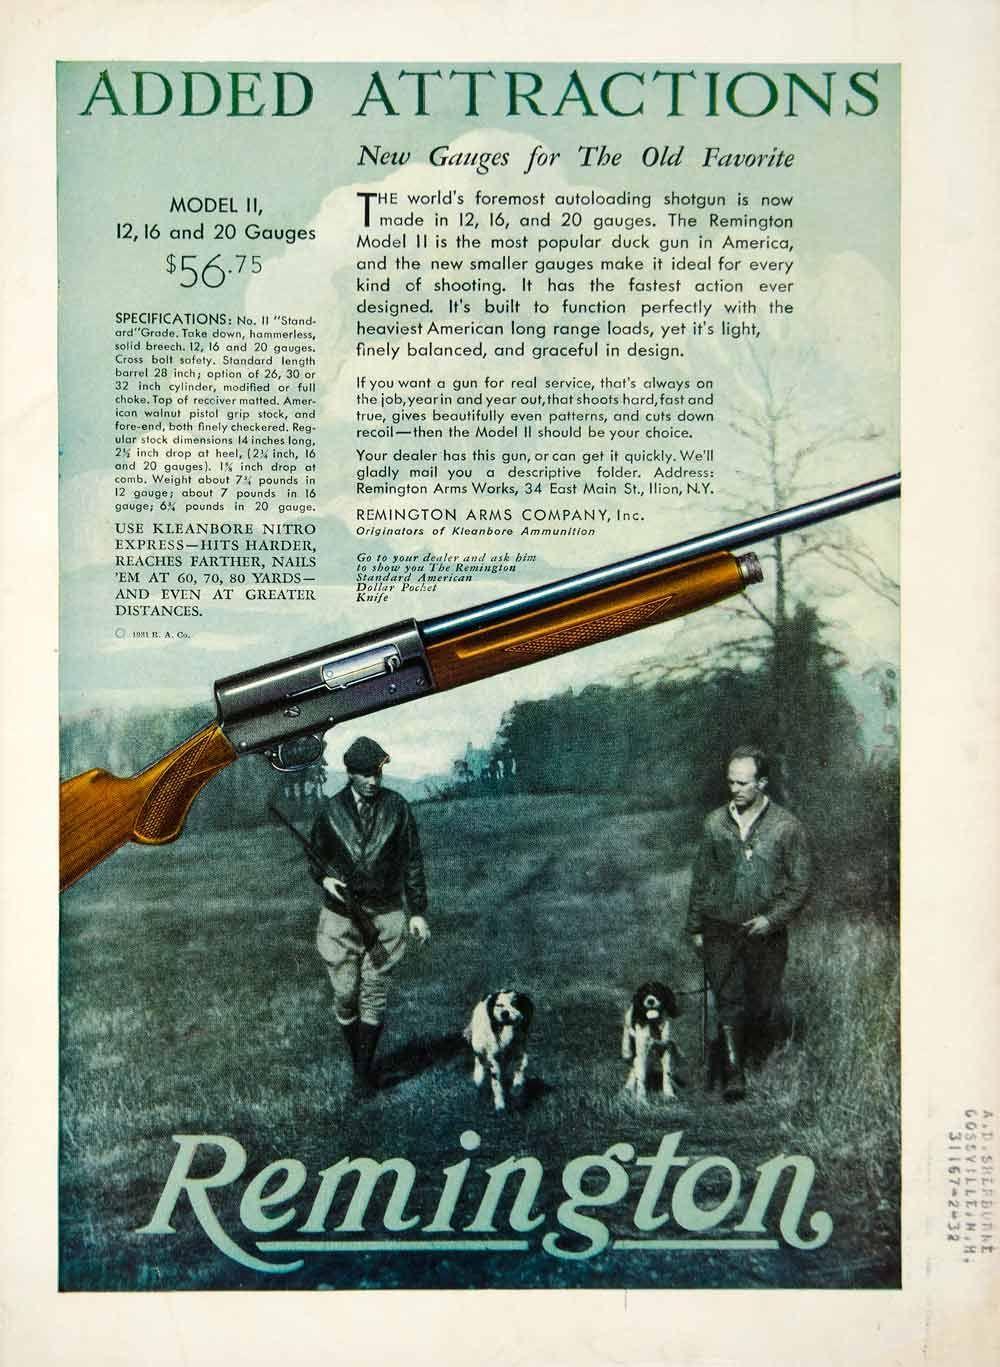 Remington Duck Logo - color print ad for the Remington Model II autoloading shotgun